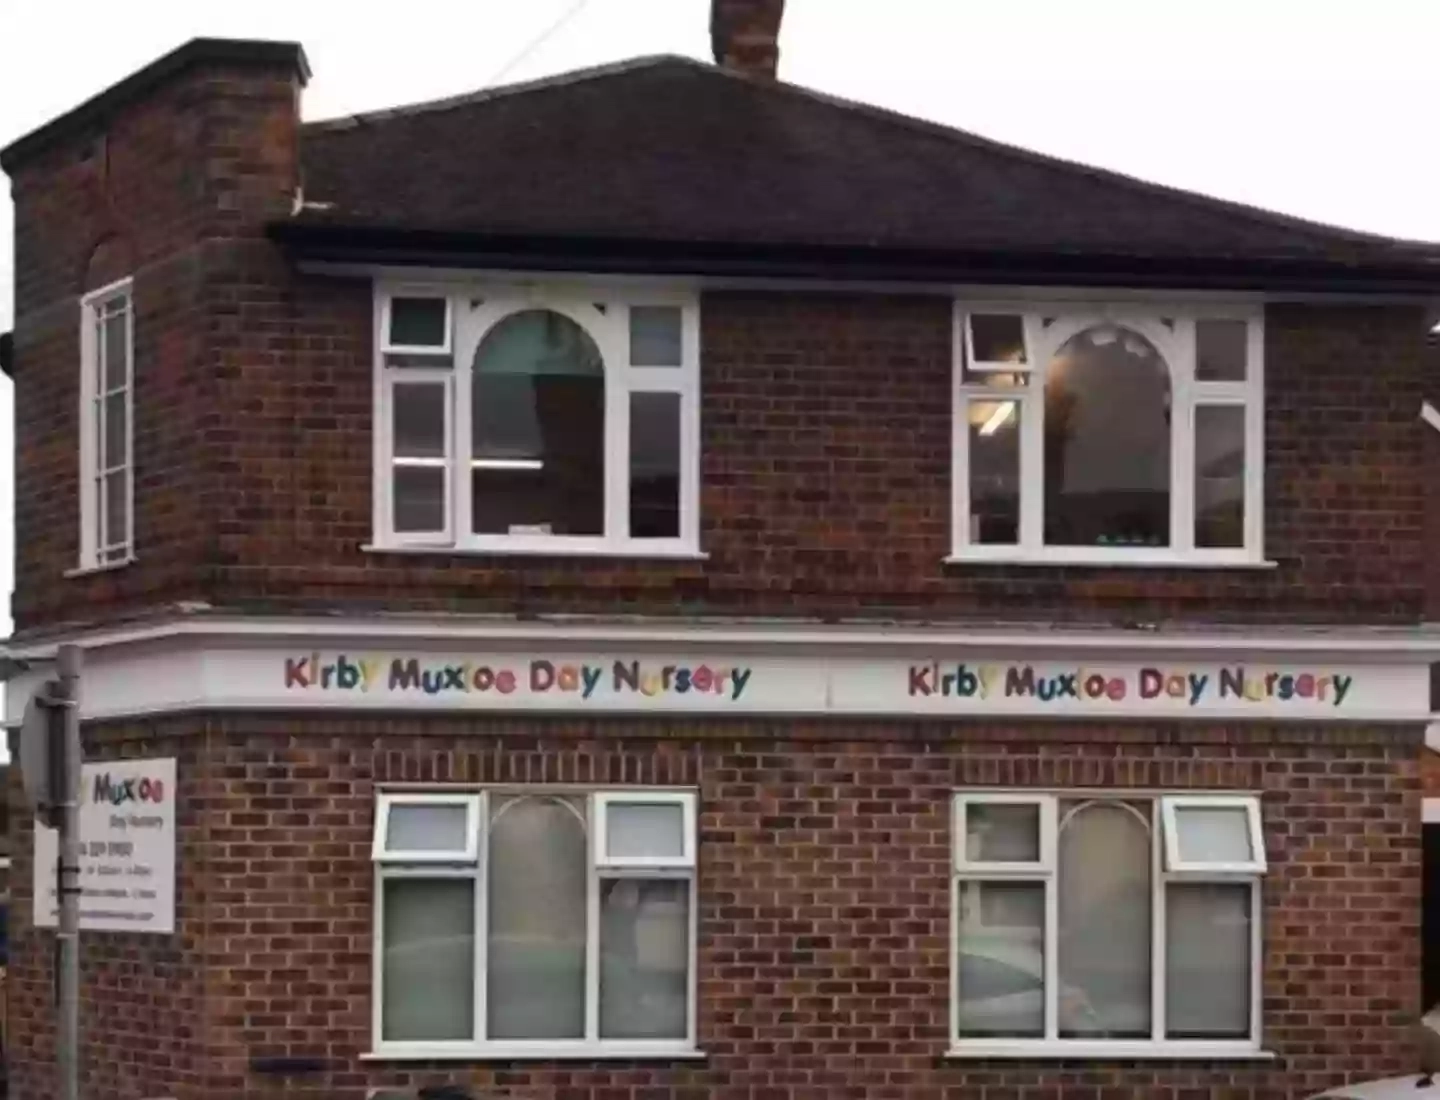 Kirby Muxloe Day Nursery and Preschool, Leicester